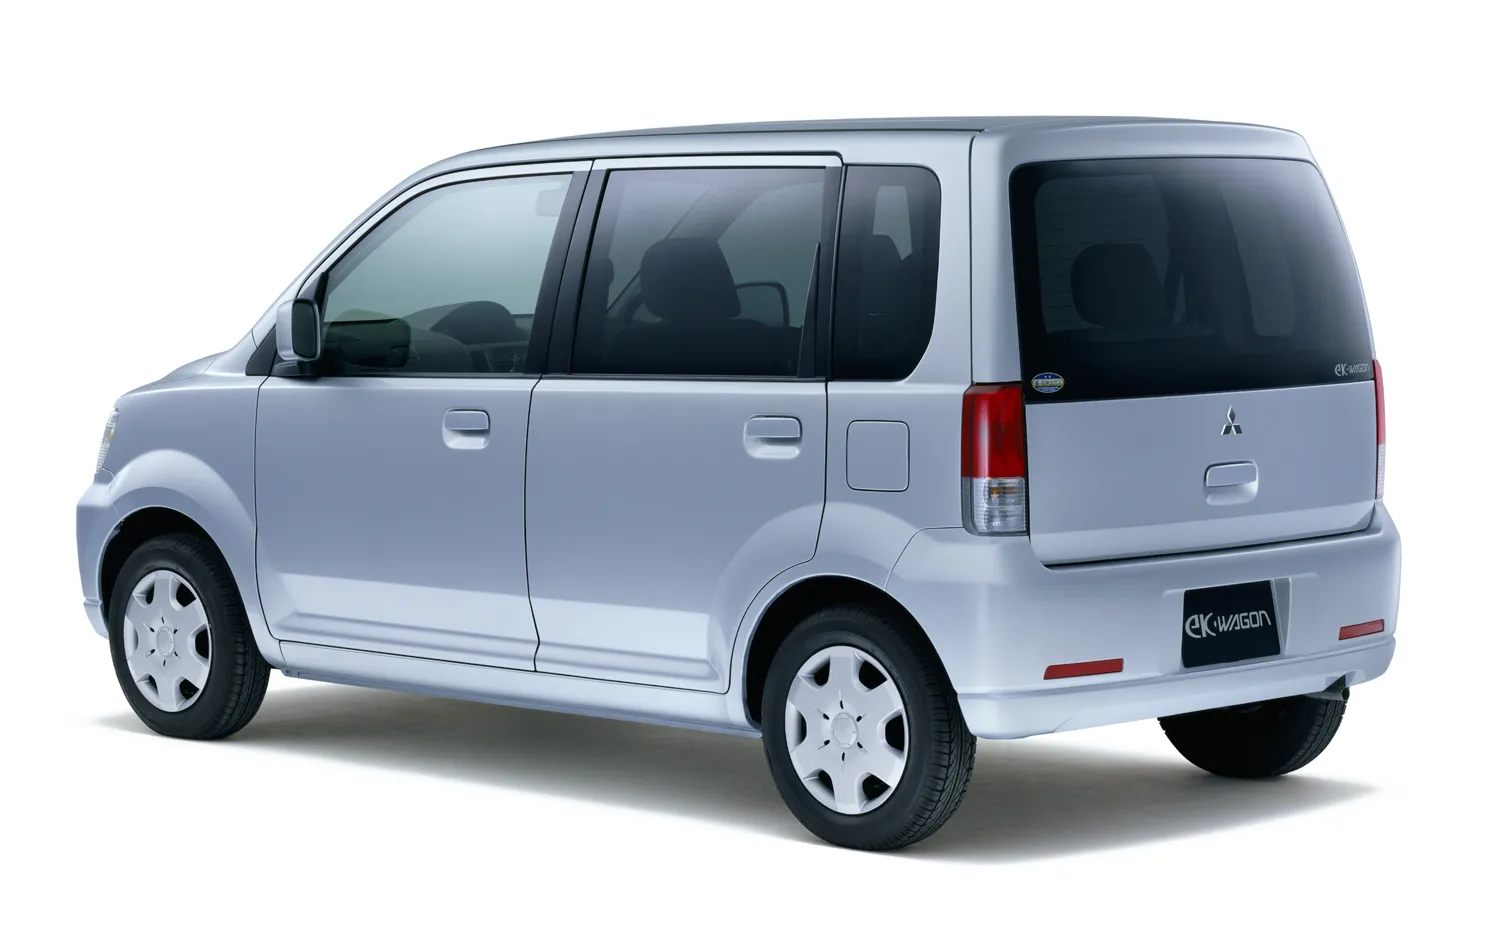 Mitsubishi eK Wagon 2004 year of release, 1 generation, microvan